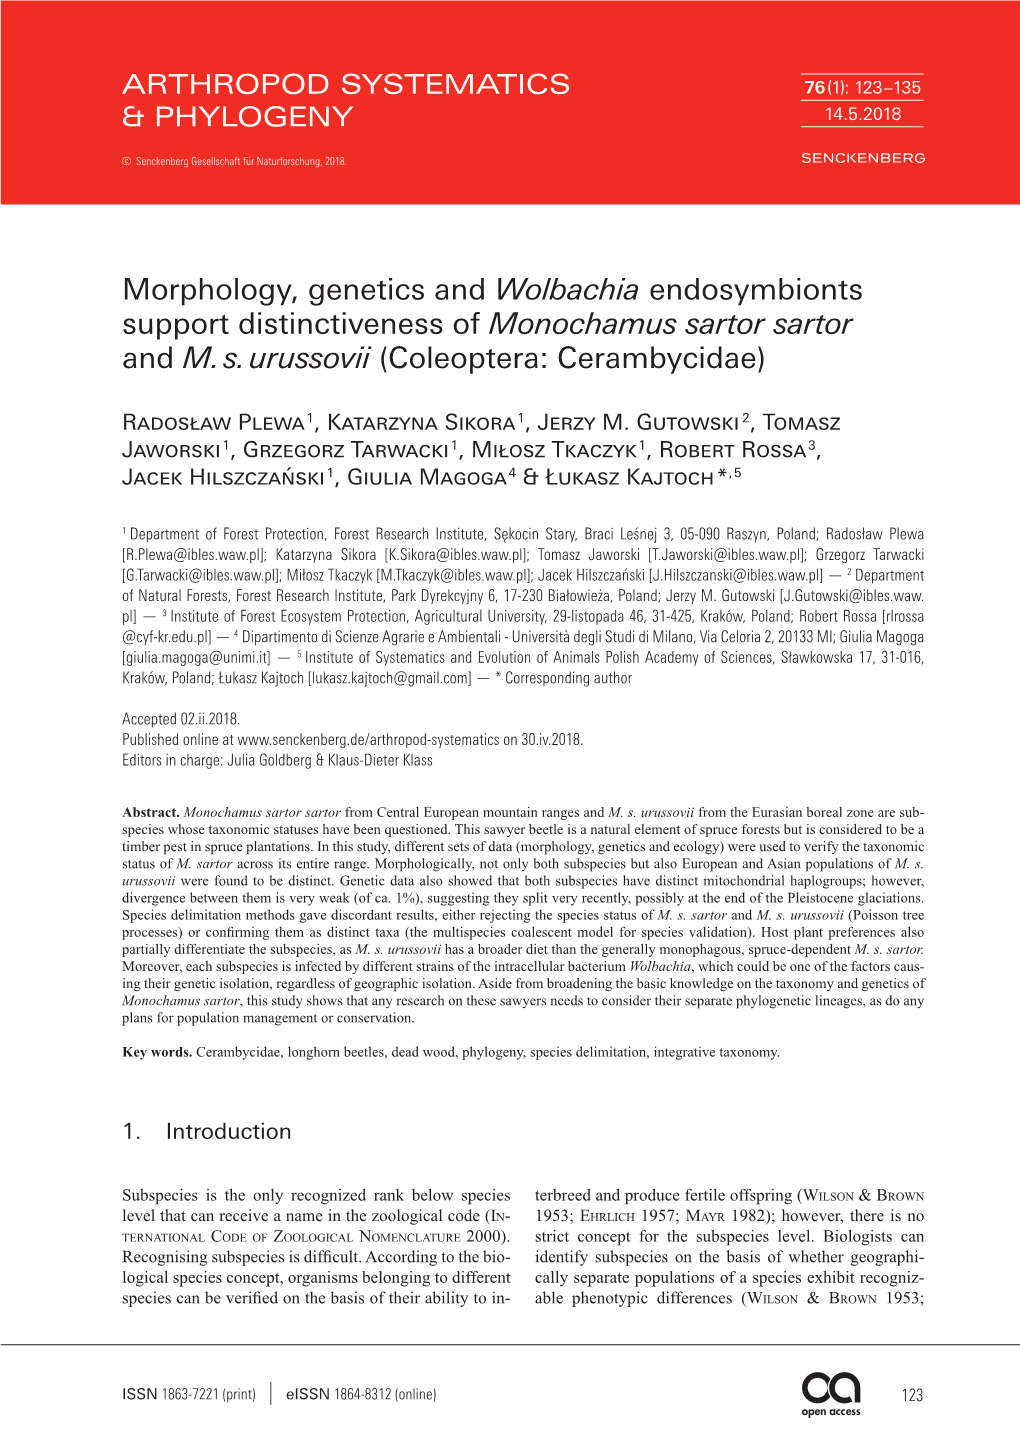 Morphology, Genetics and Wolbachia Endosymbionts Support Distinctiveness of Monochamus Sartor Sartor and M